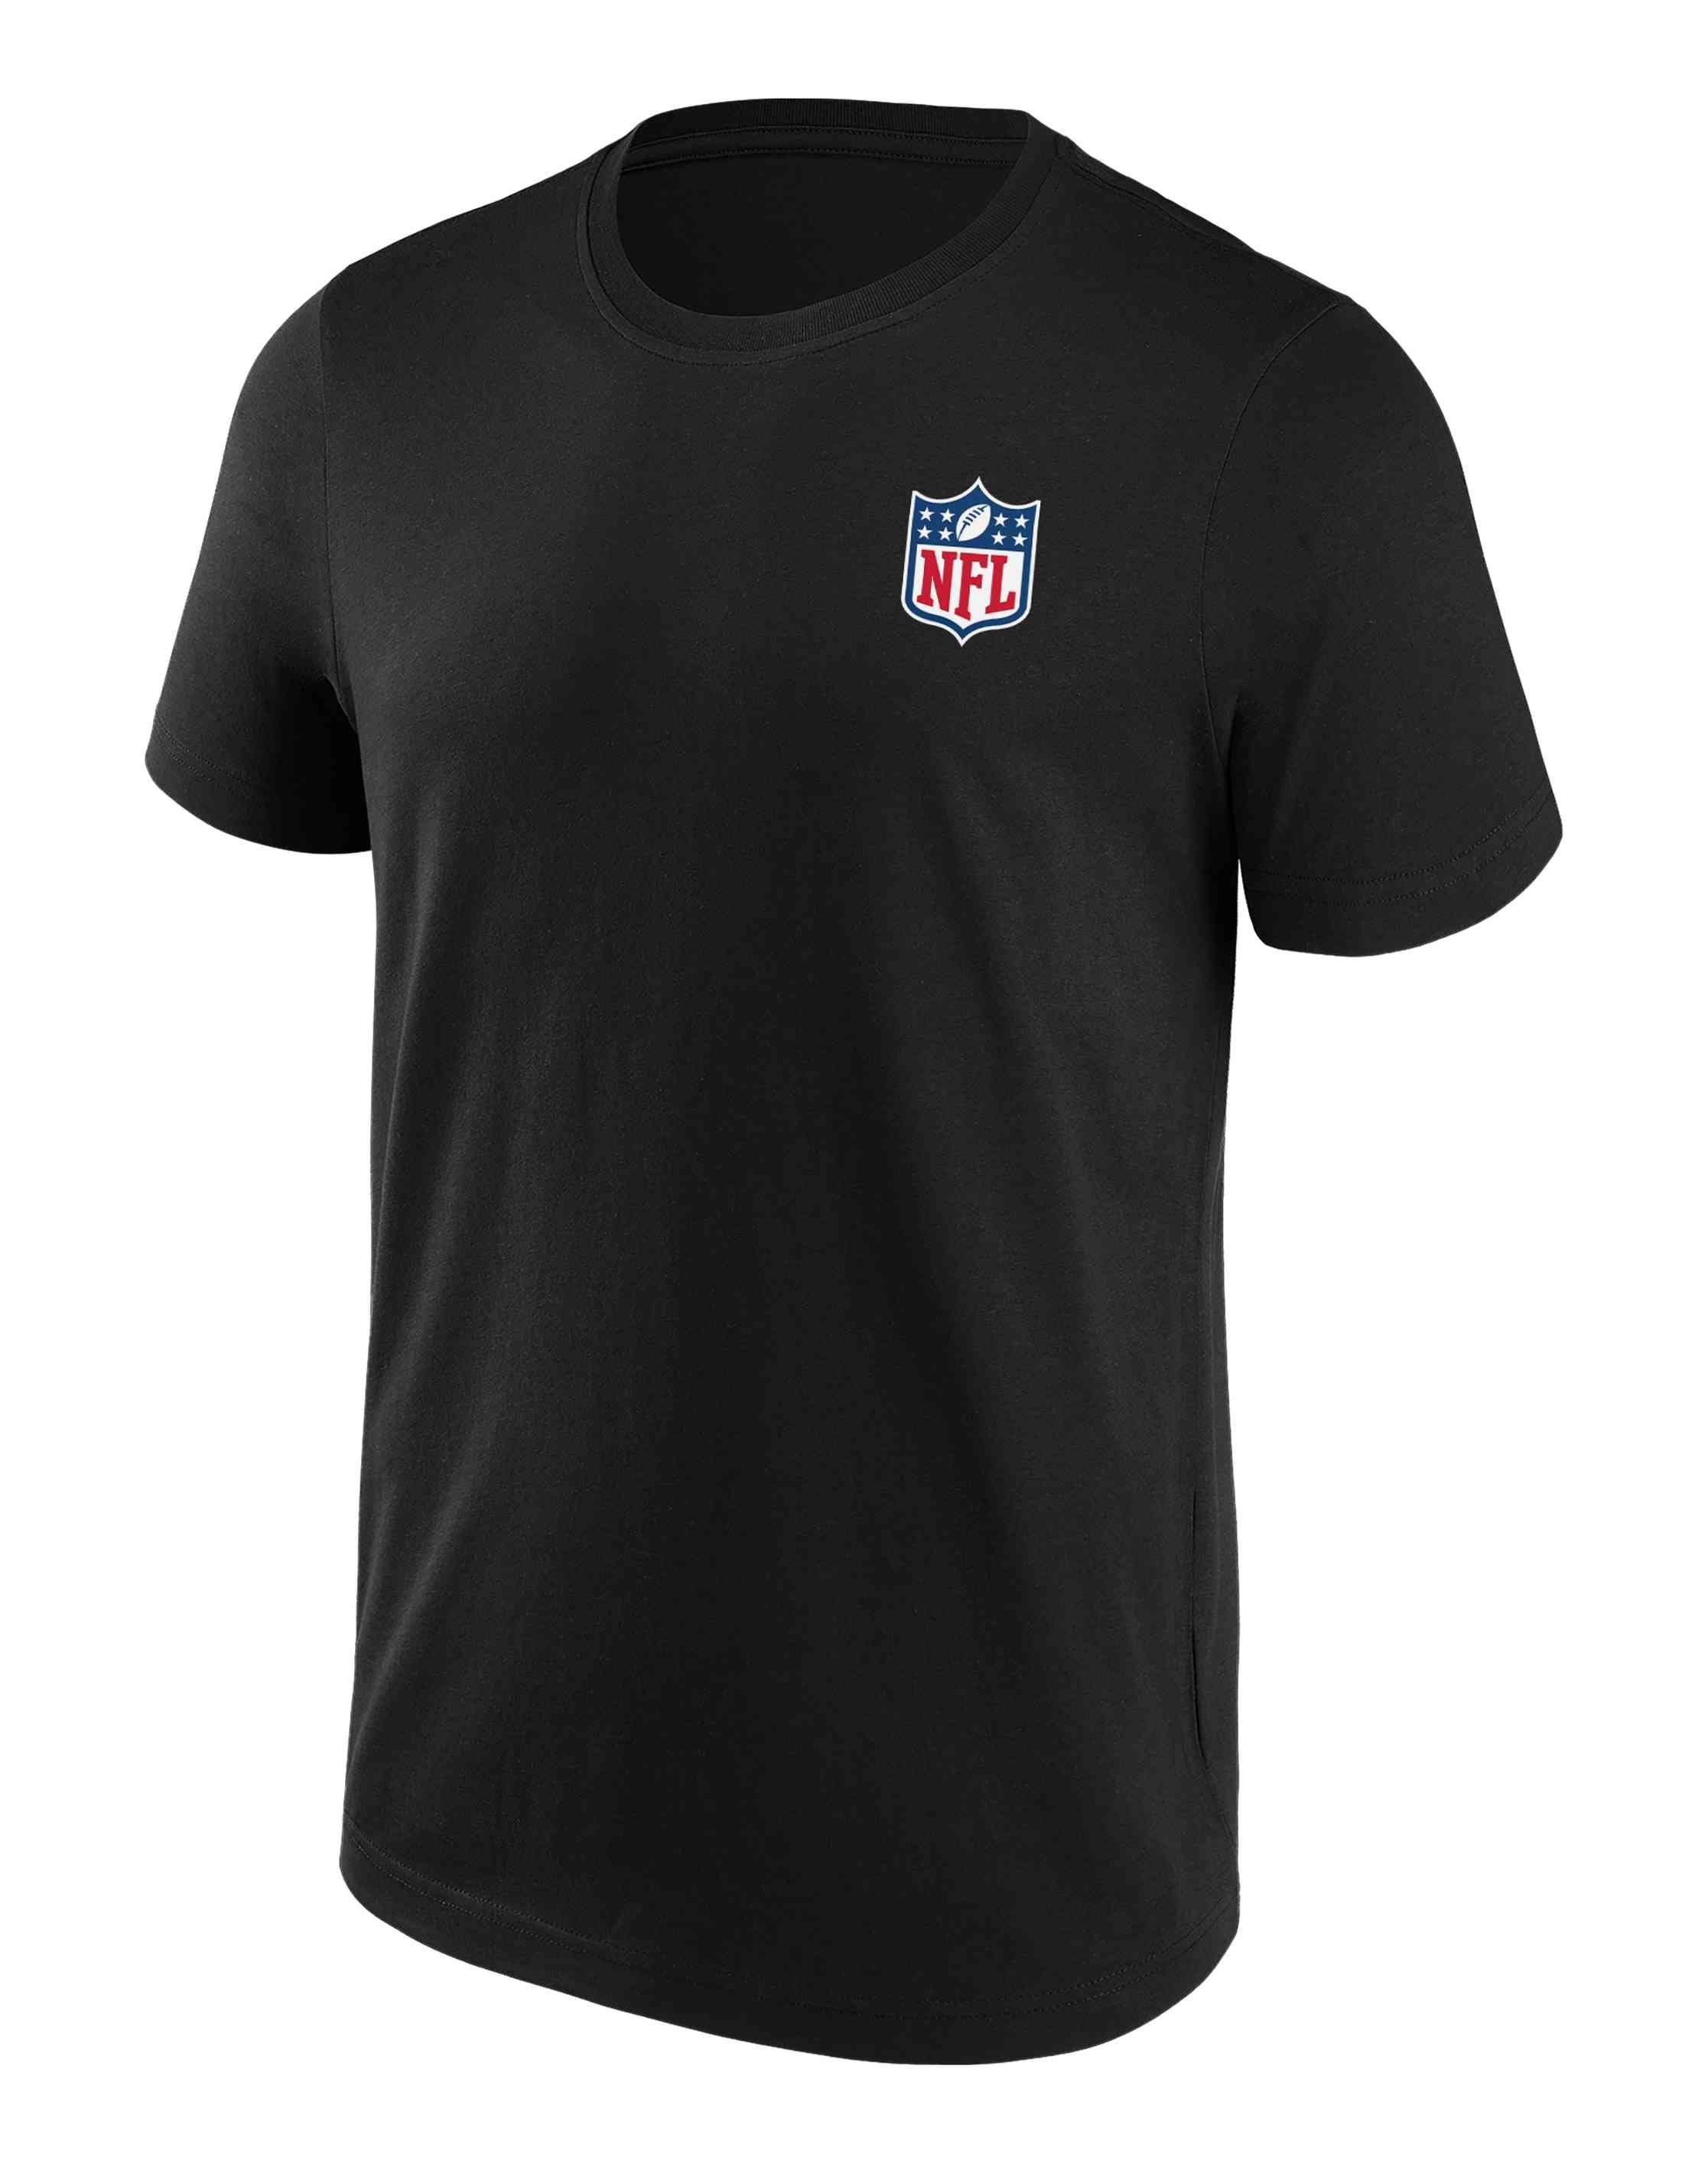 Fanatics T-Shirt NFL Shield All Team Graphic